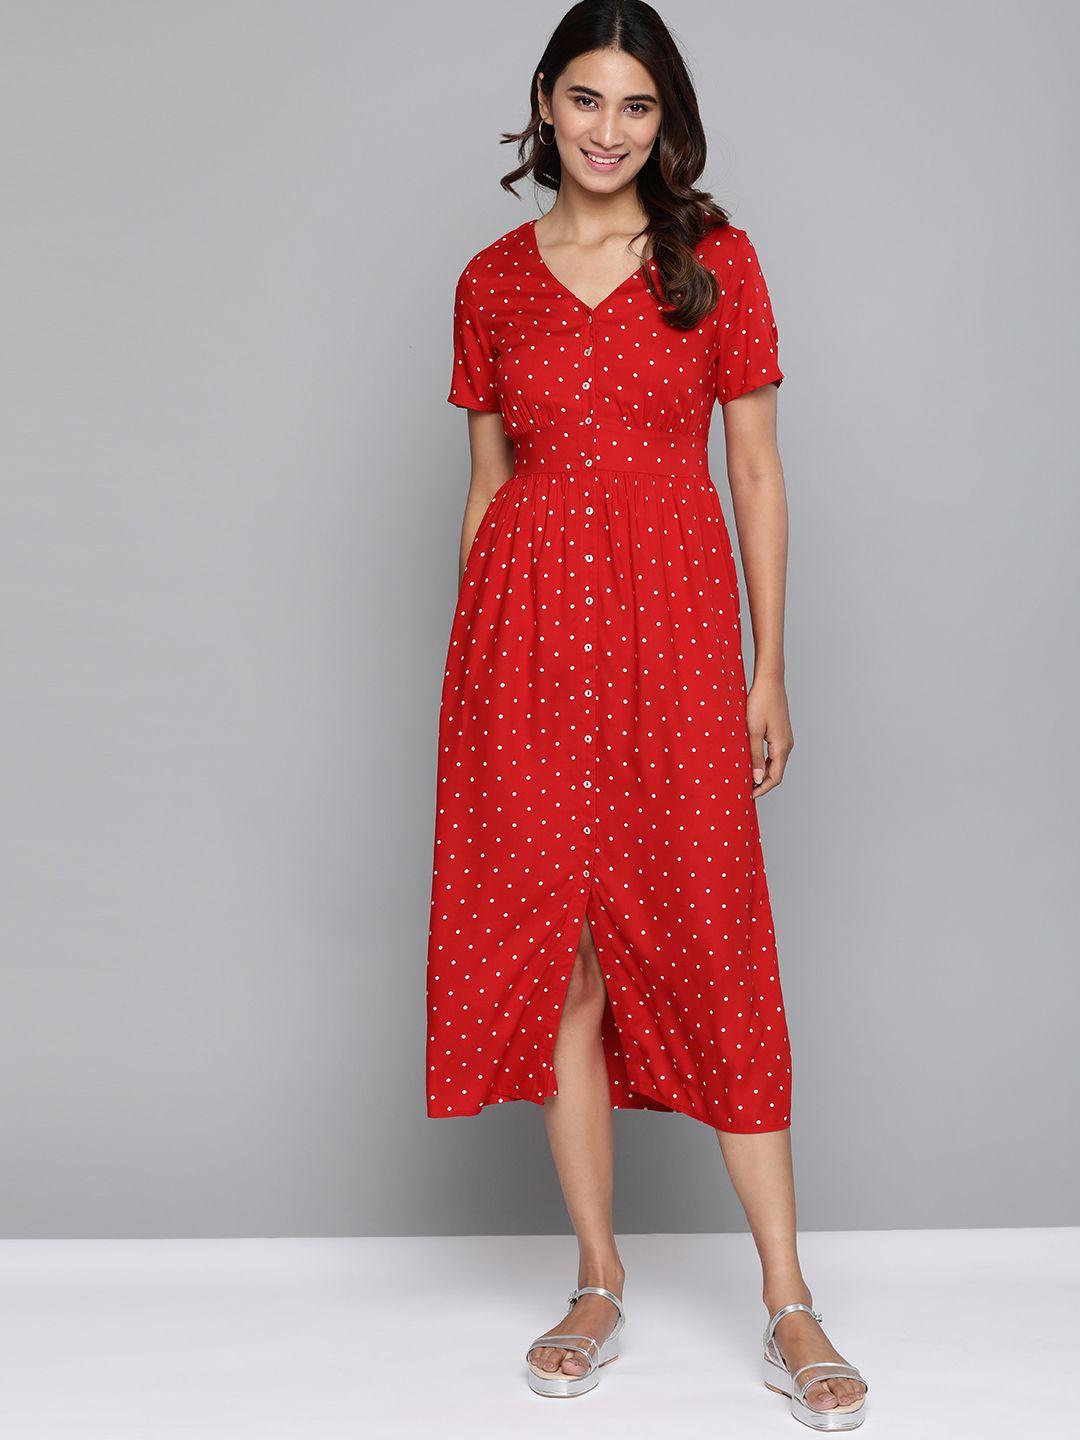 mast & harbour red & white polka dots print empire dress